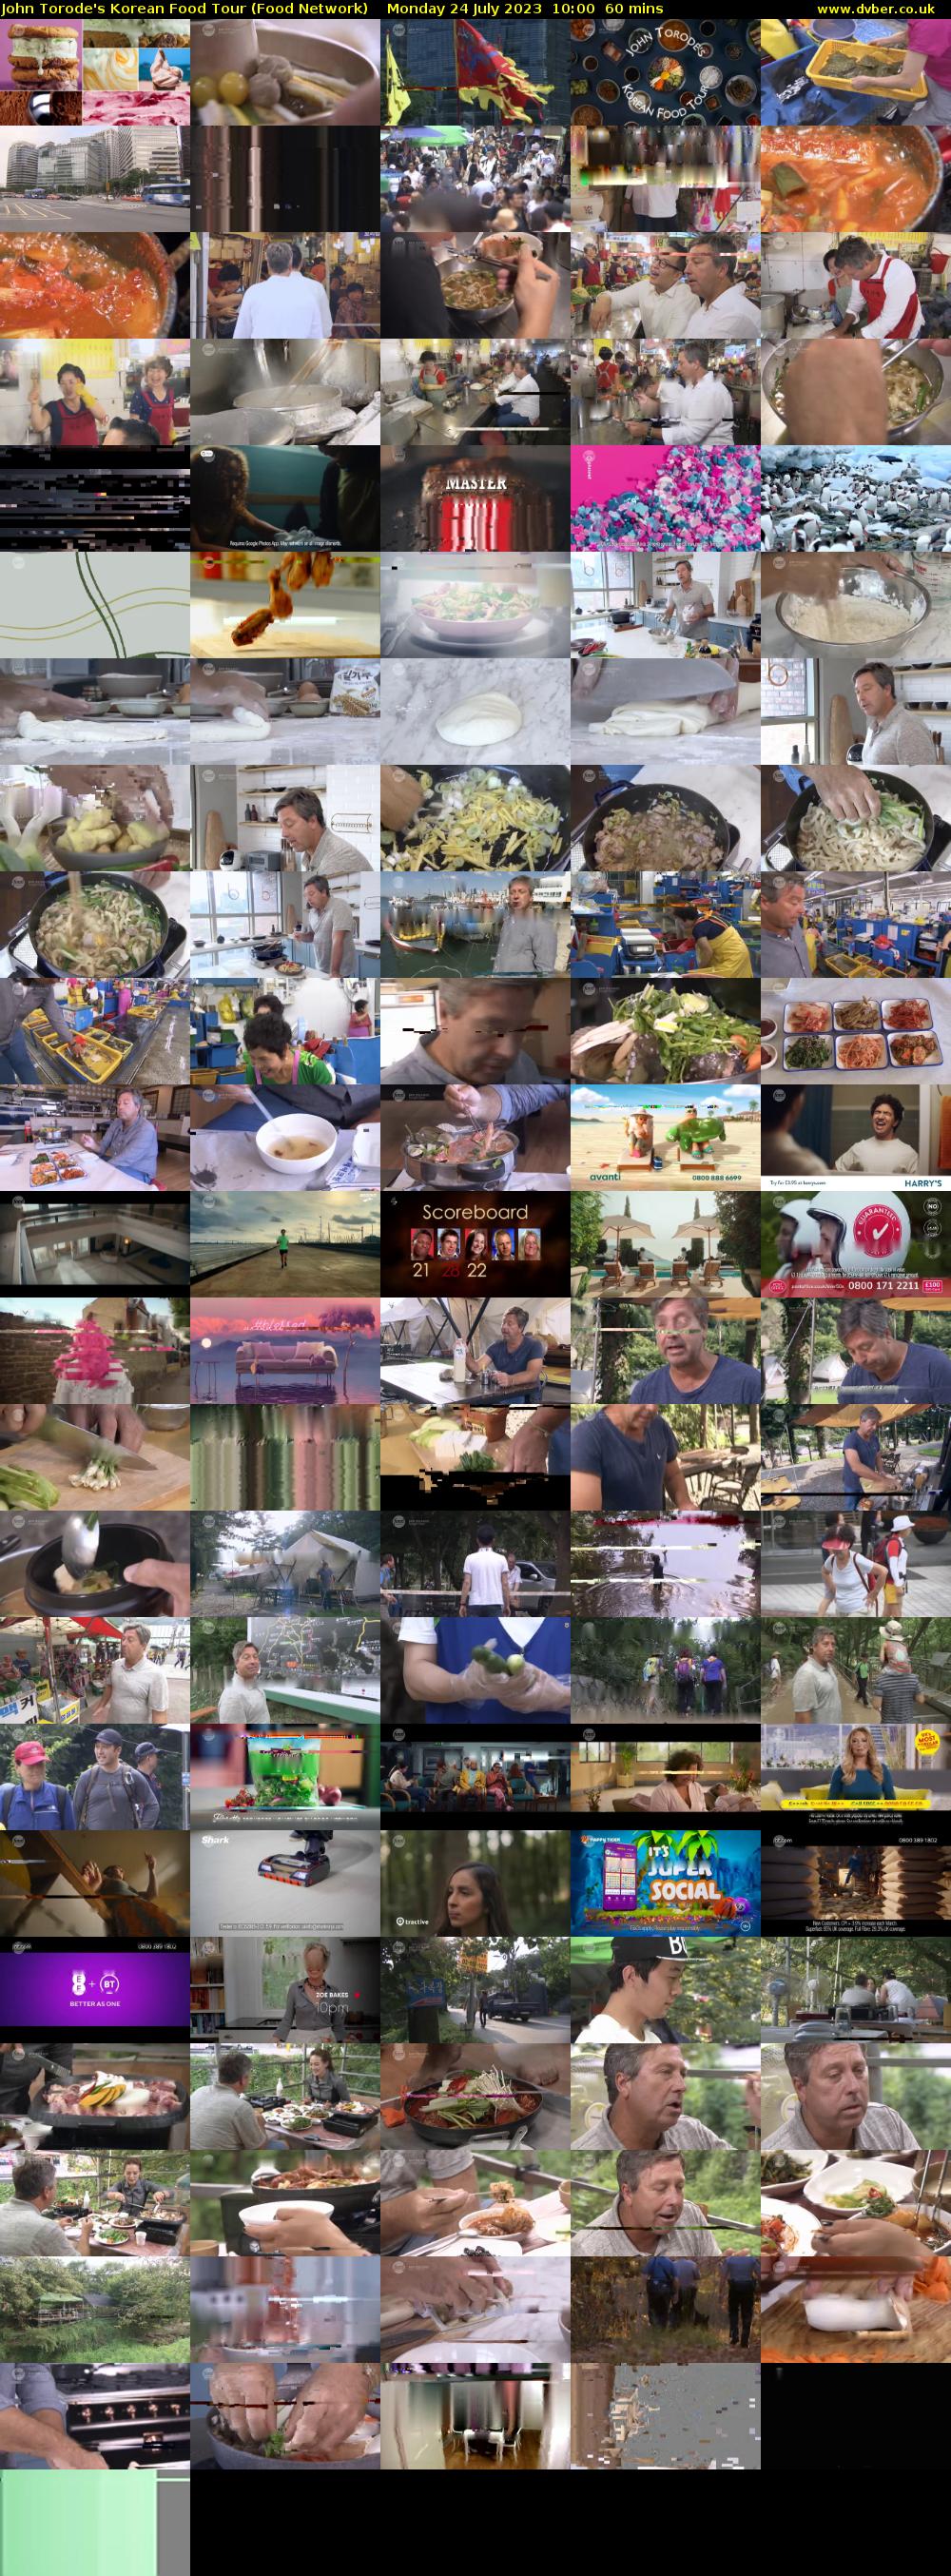 John Torode's Korean Food Tour (Food Network) Monday 24 July 2023 10:00 - 11:00